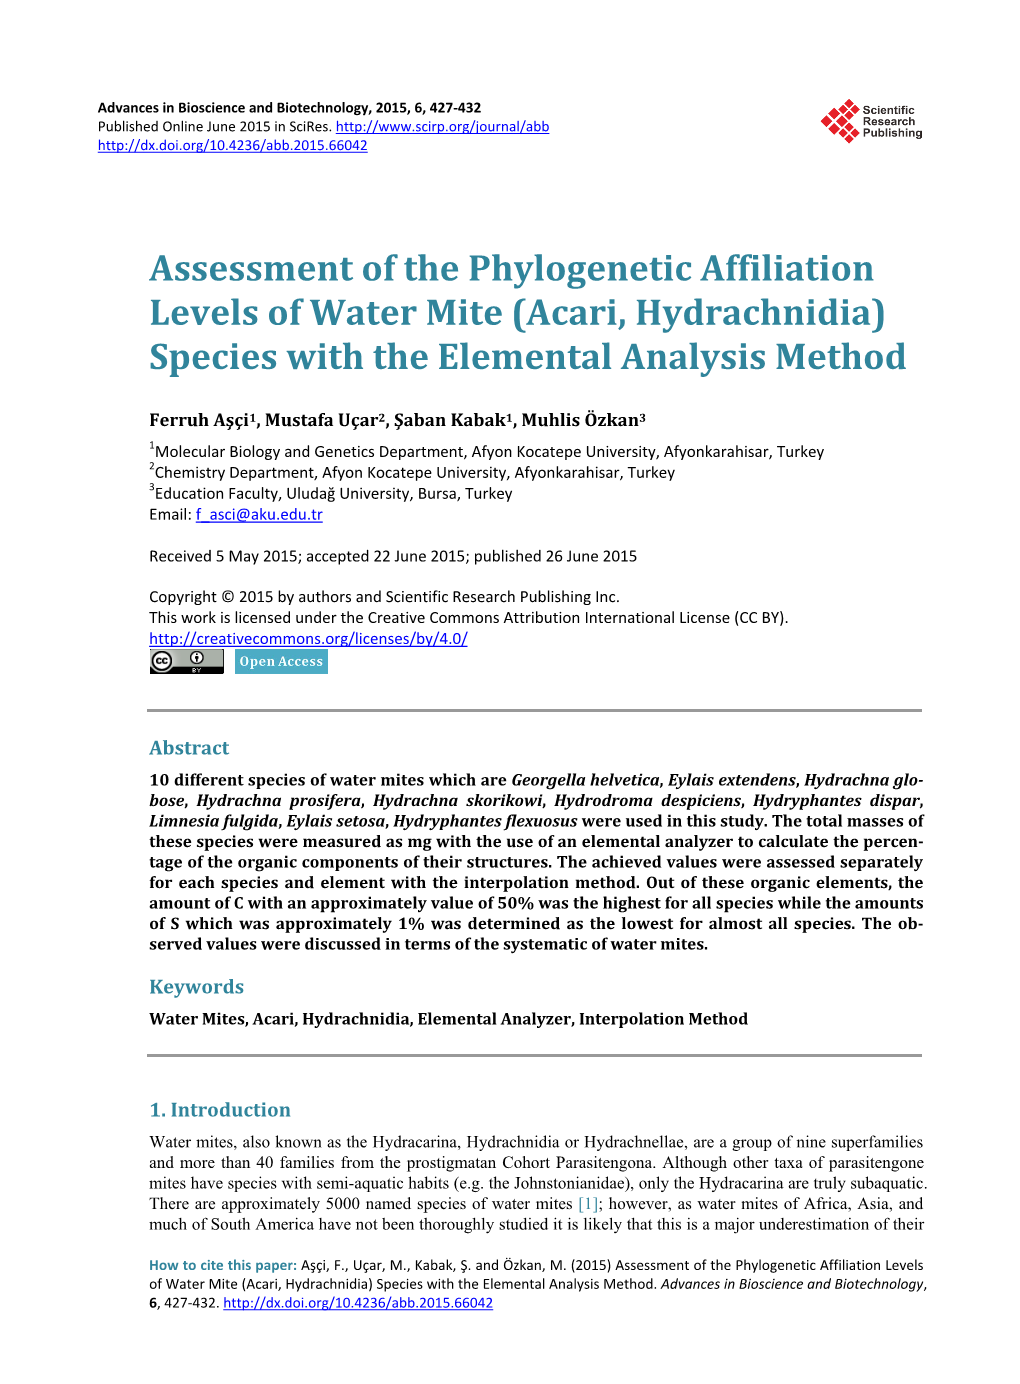 Acari, Hydrachnidia) Species with the Elemental Analysis Method